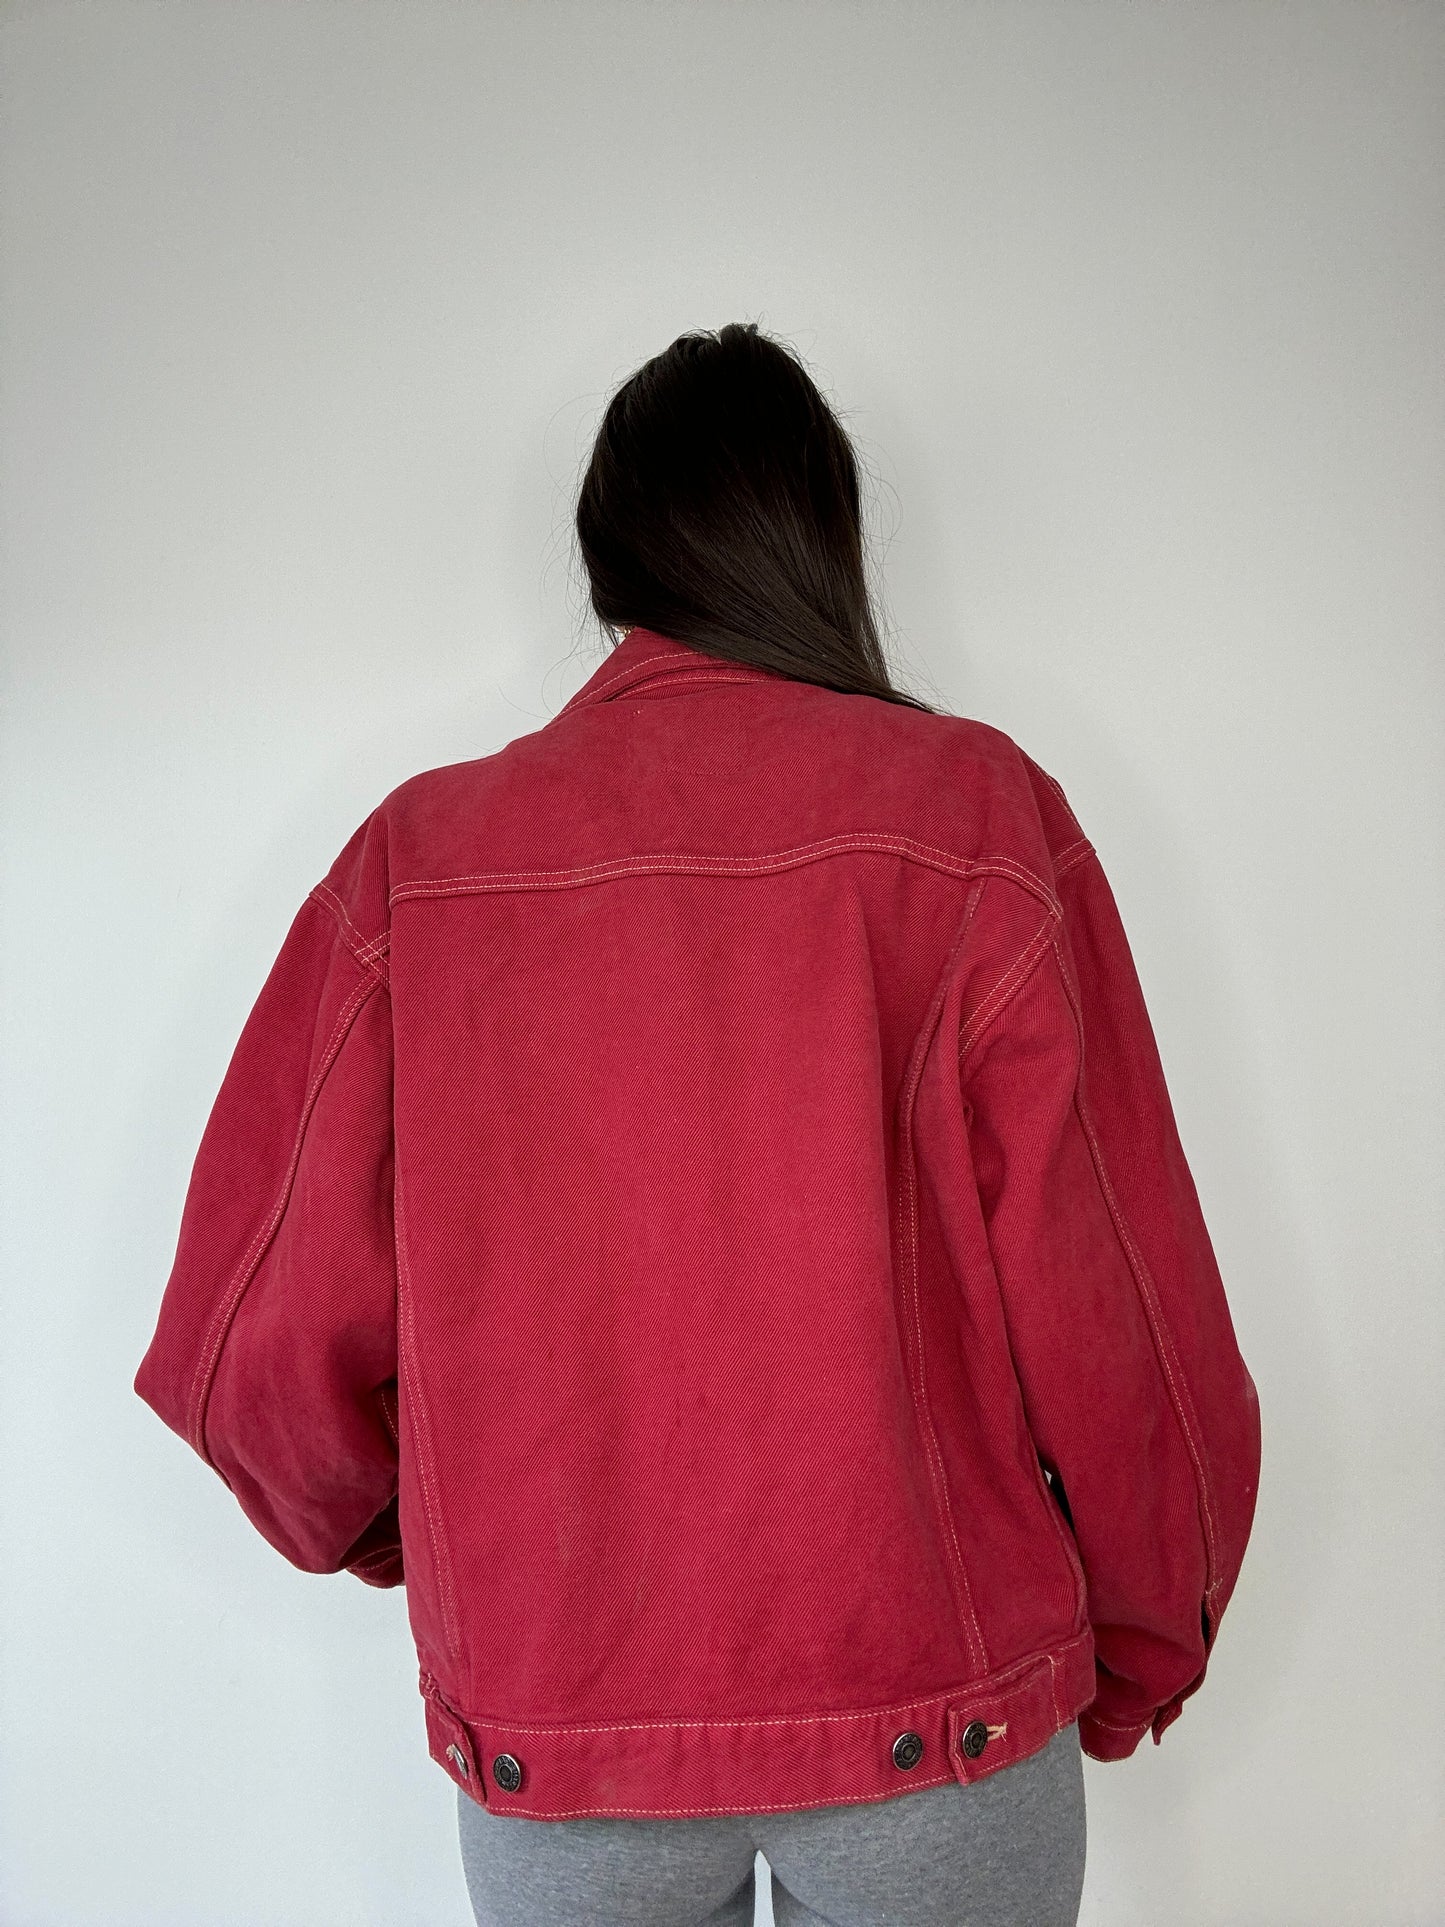 Vintage Gap Denim Jacket (S)